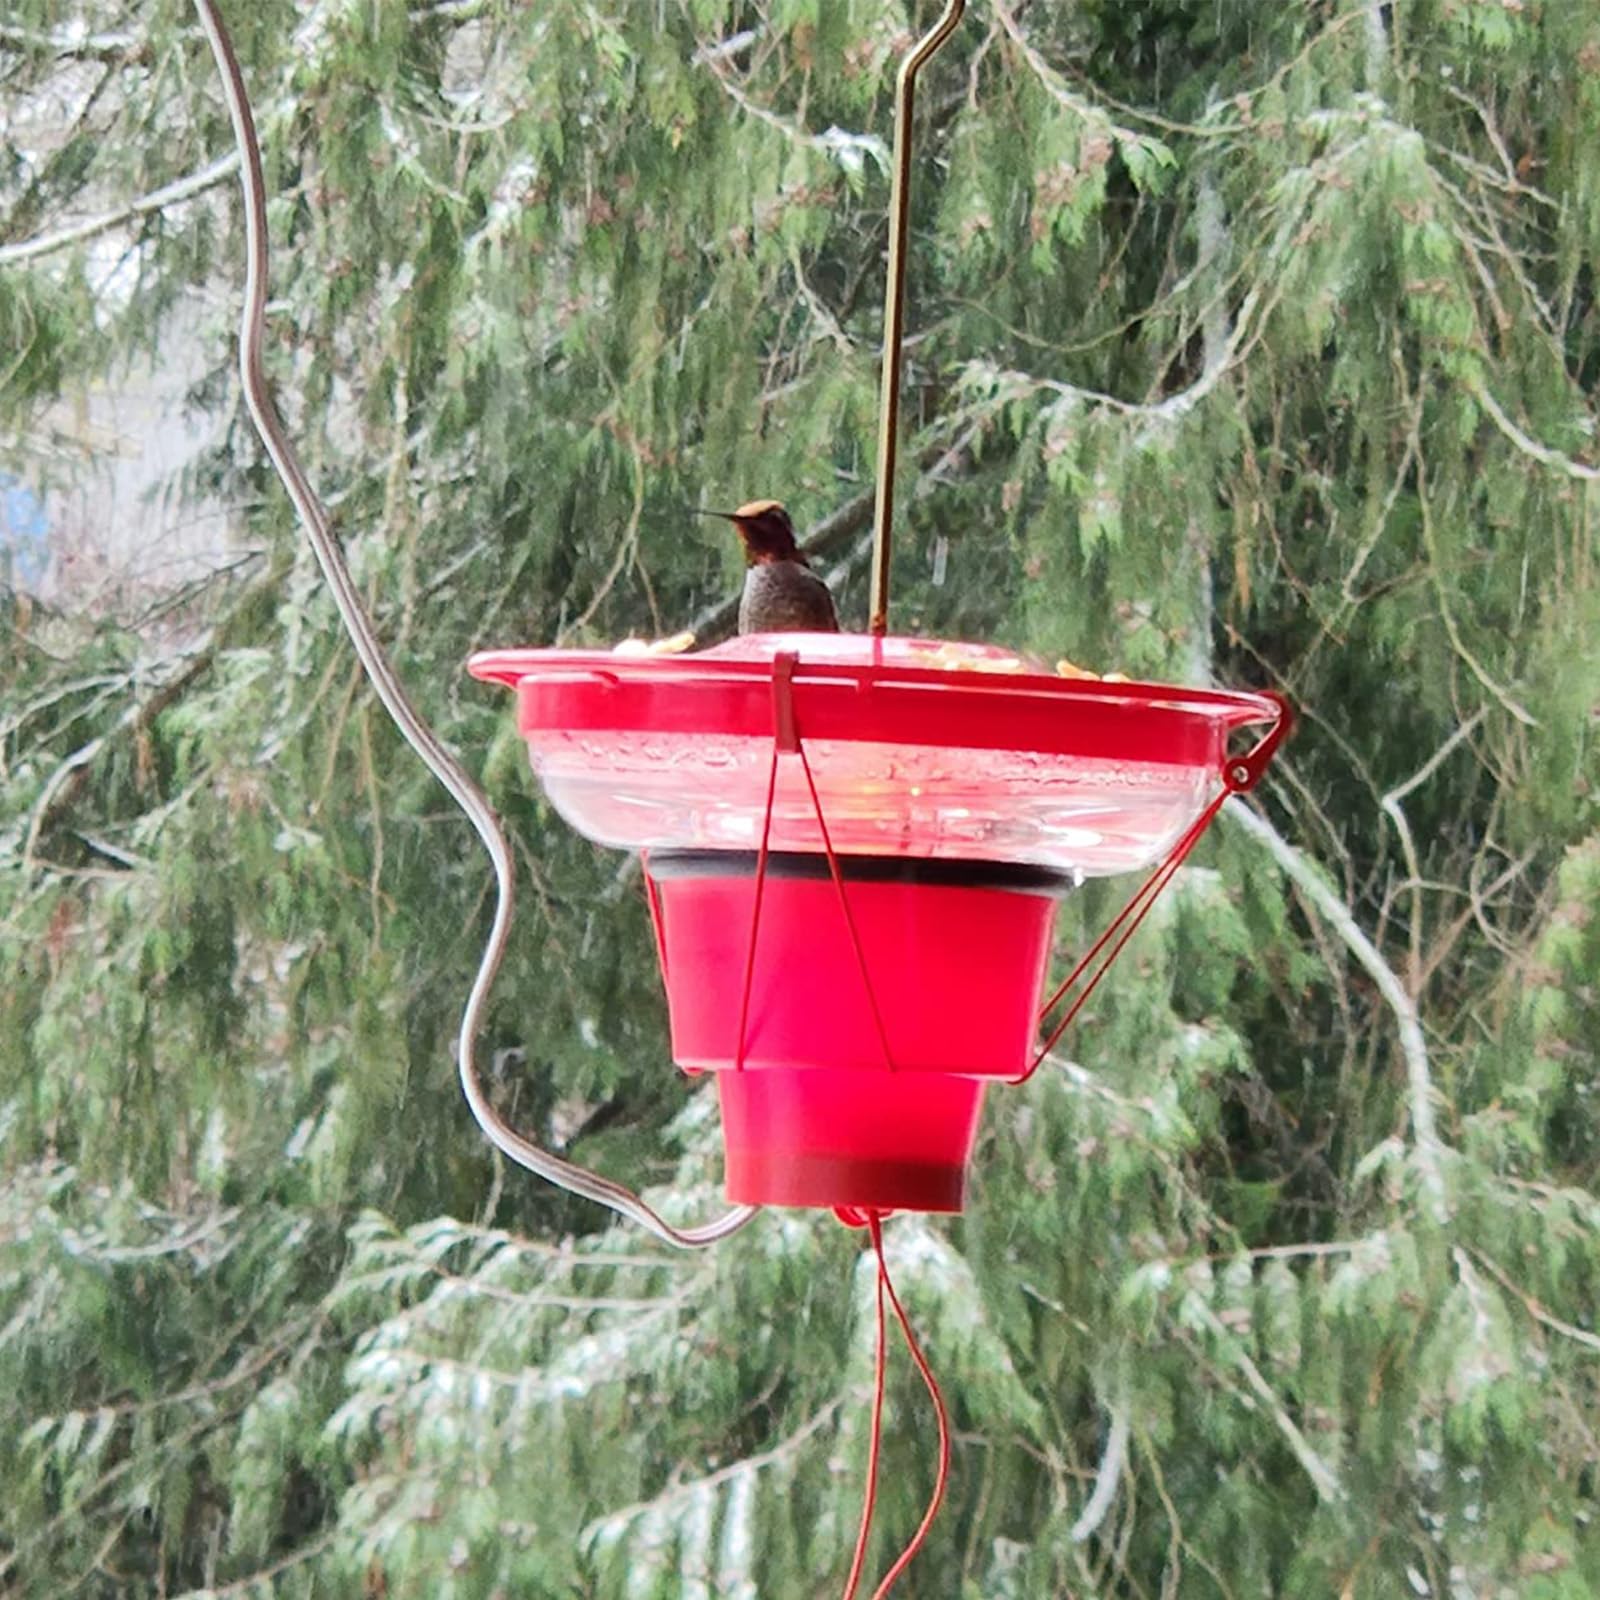 SHWORON Heated Hummingbird Feeders Outdoors, Feeder Heater Attaches to Bottom for Feed Hummingbirds in Freezing Weather Winter Outdoor Garden (Red) 13×13×7